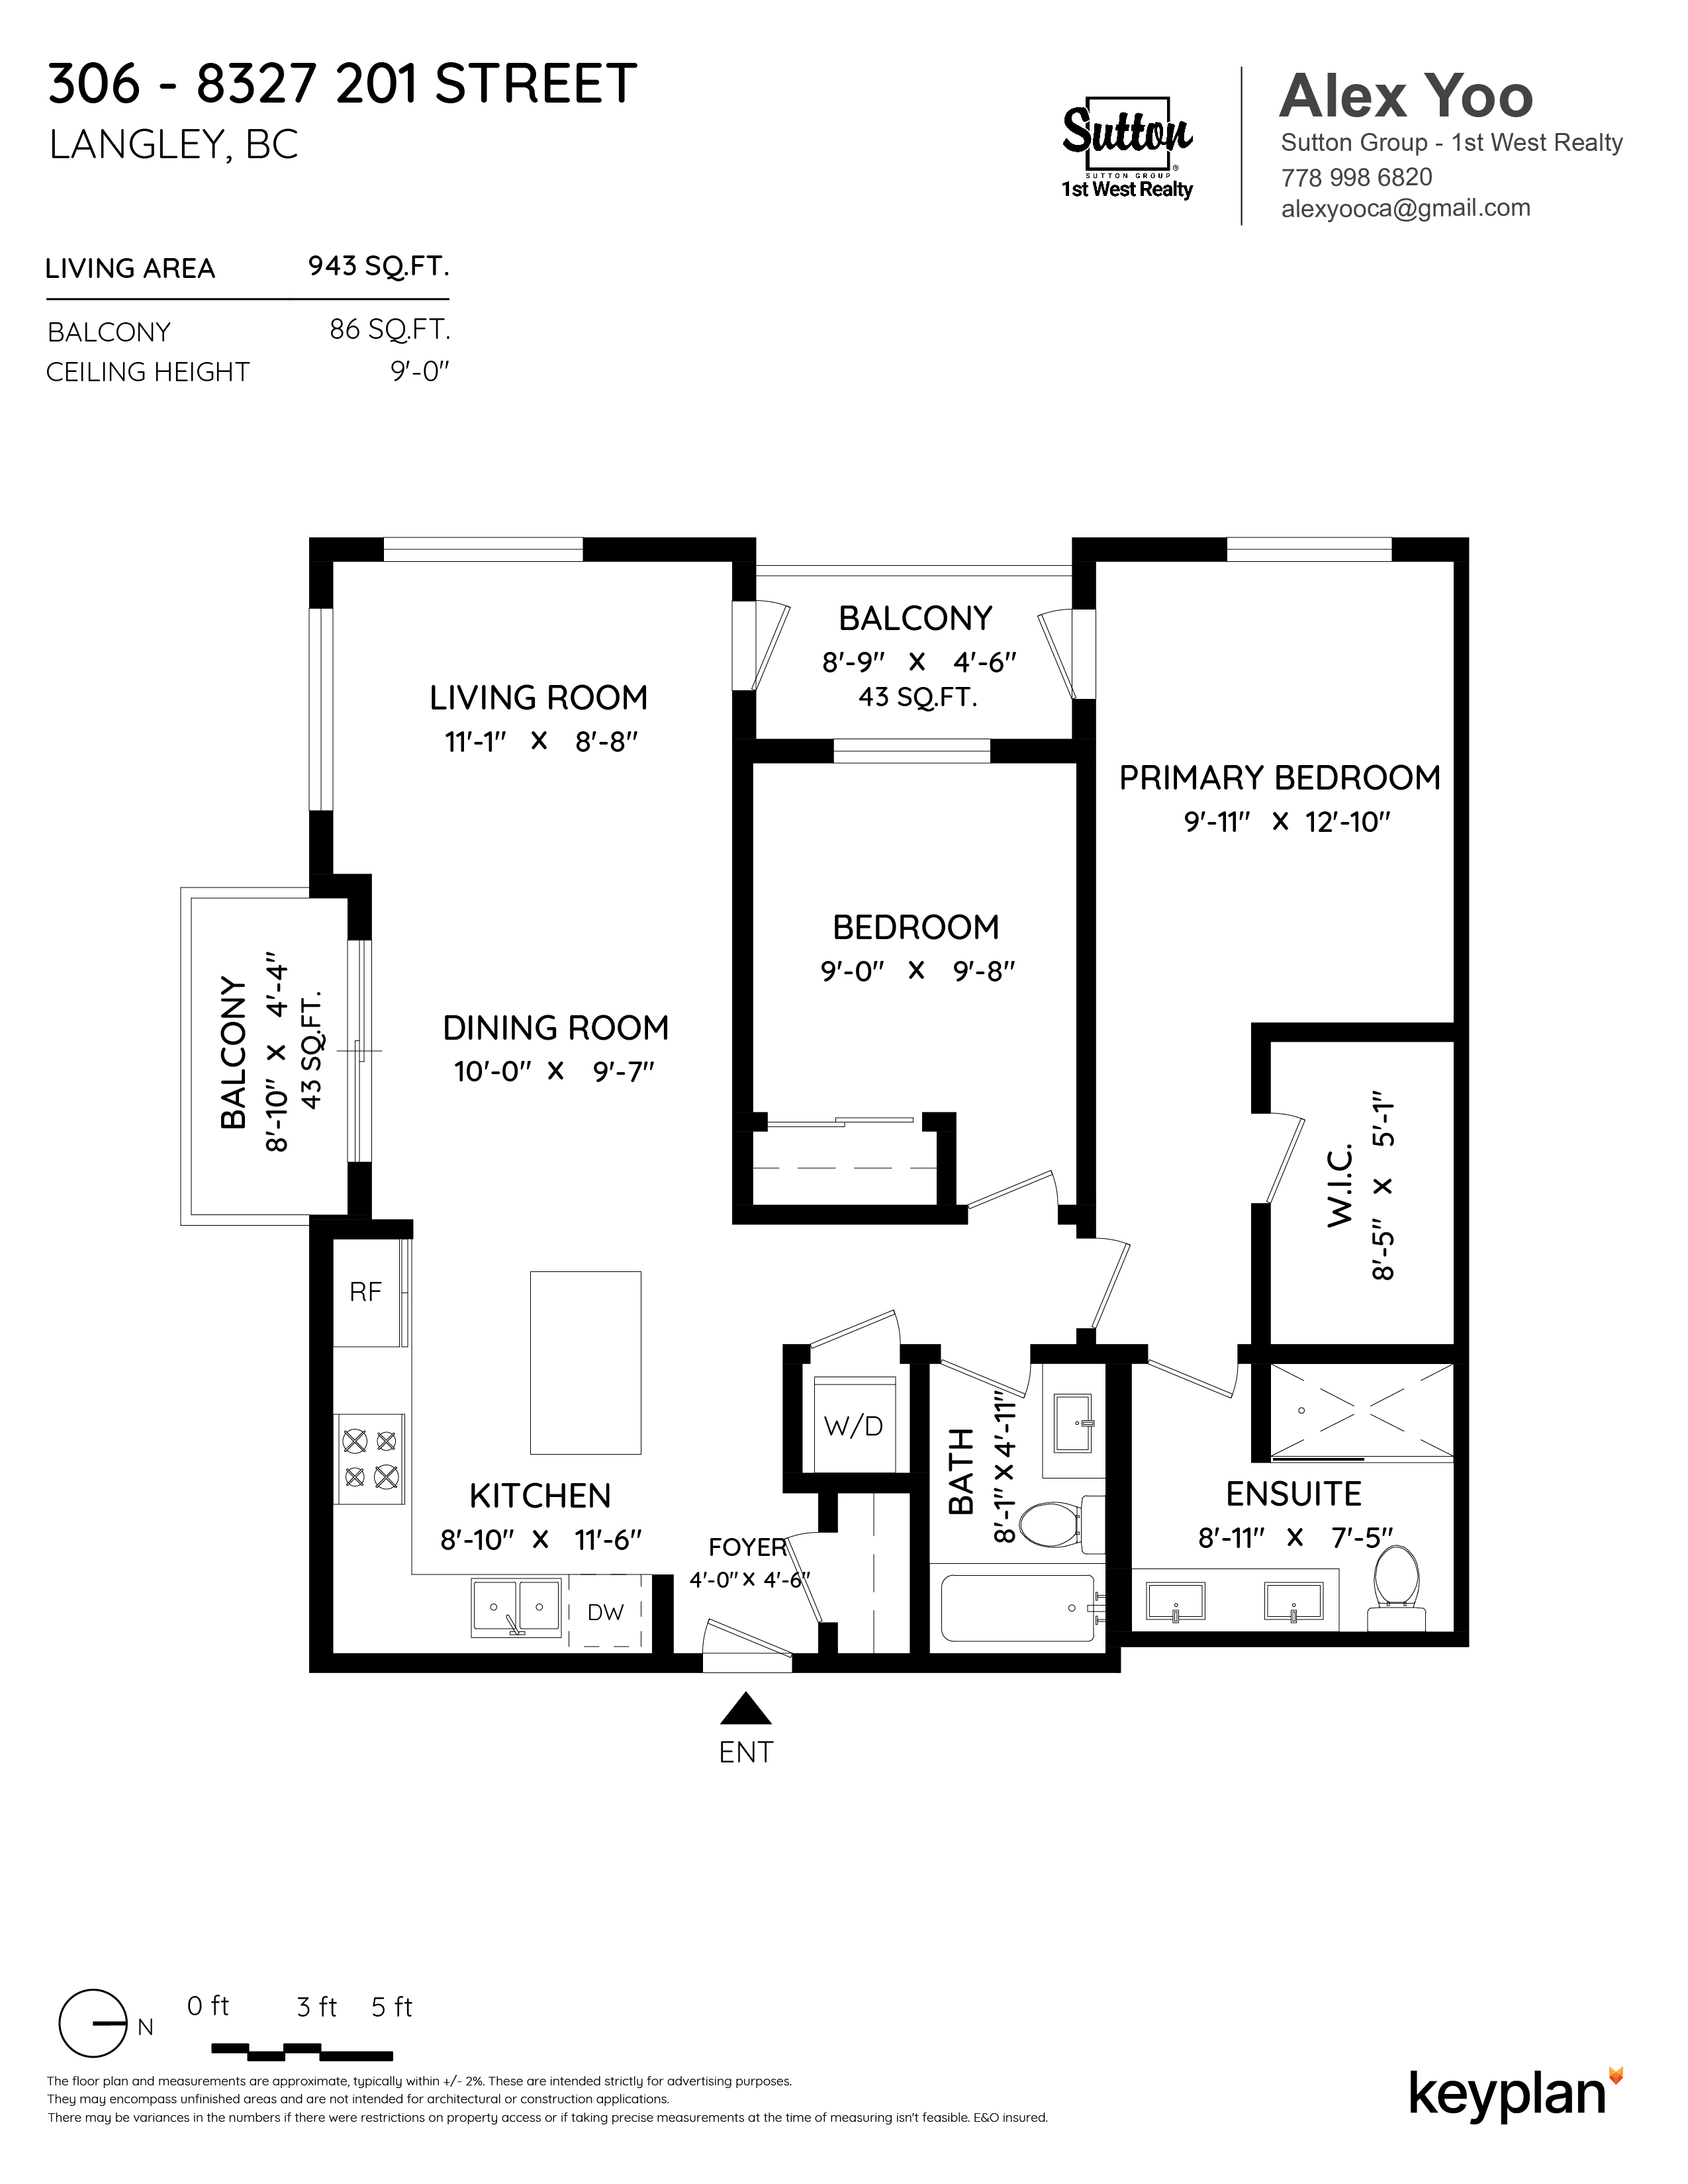 Alex Yoo - Unit 306 - 8327 201 Street, Langley, BC, V2Y 3P5 Canada | Floor Plan 1